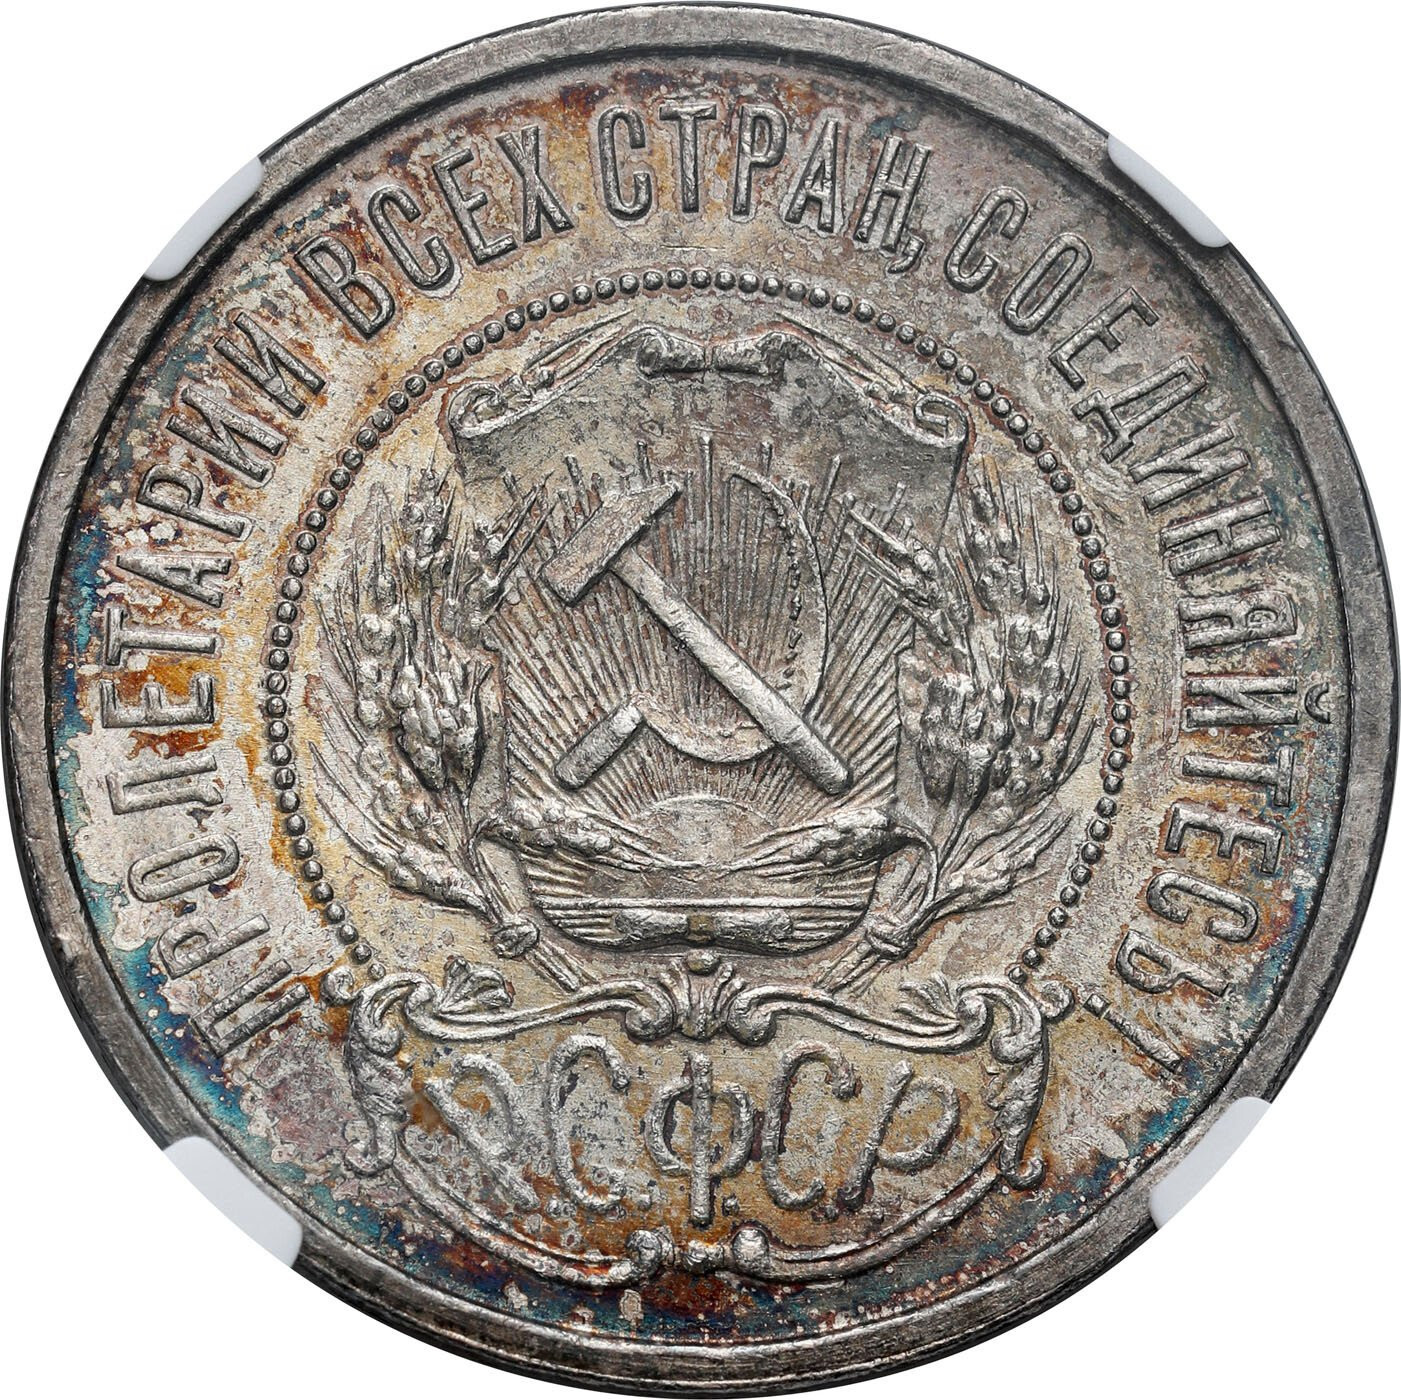 Rosja, ZSRR. 50 kopiejek (1/2 rubla) 1921 (АГ), Petersburg, NGC MS63 - PIĘKNE